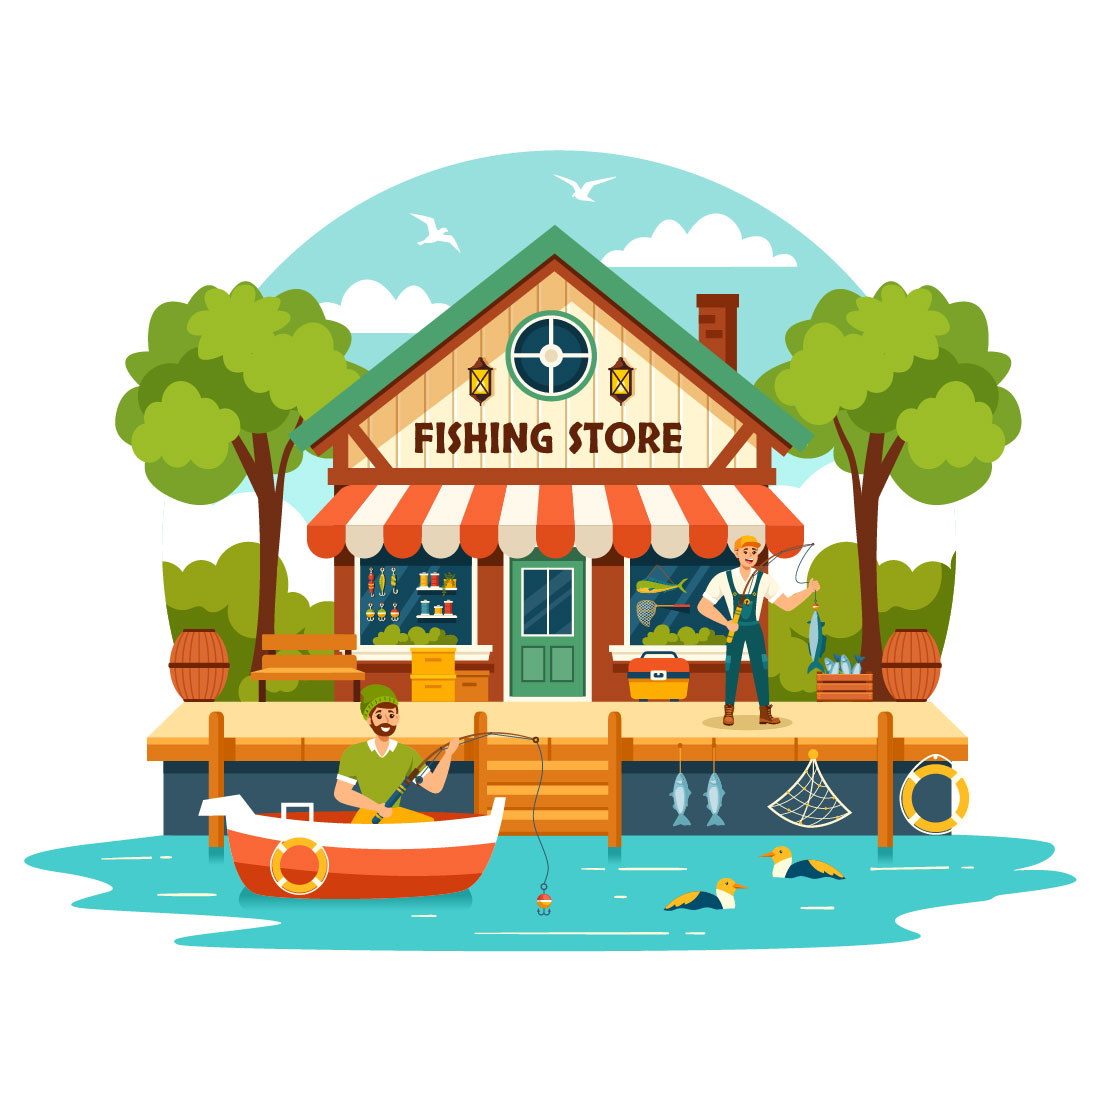 8 Fishing Store Illustration cover image.